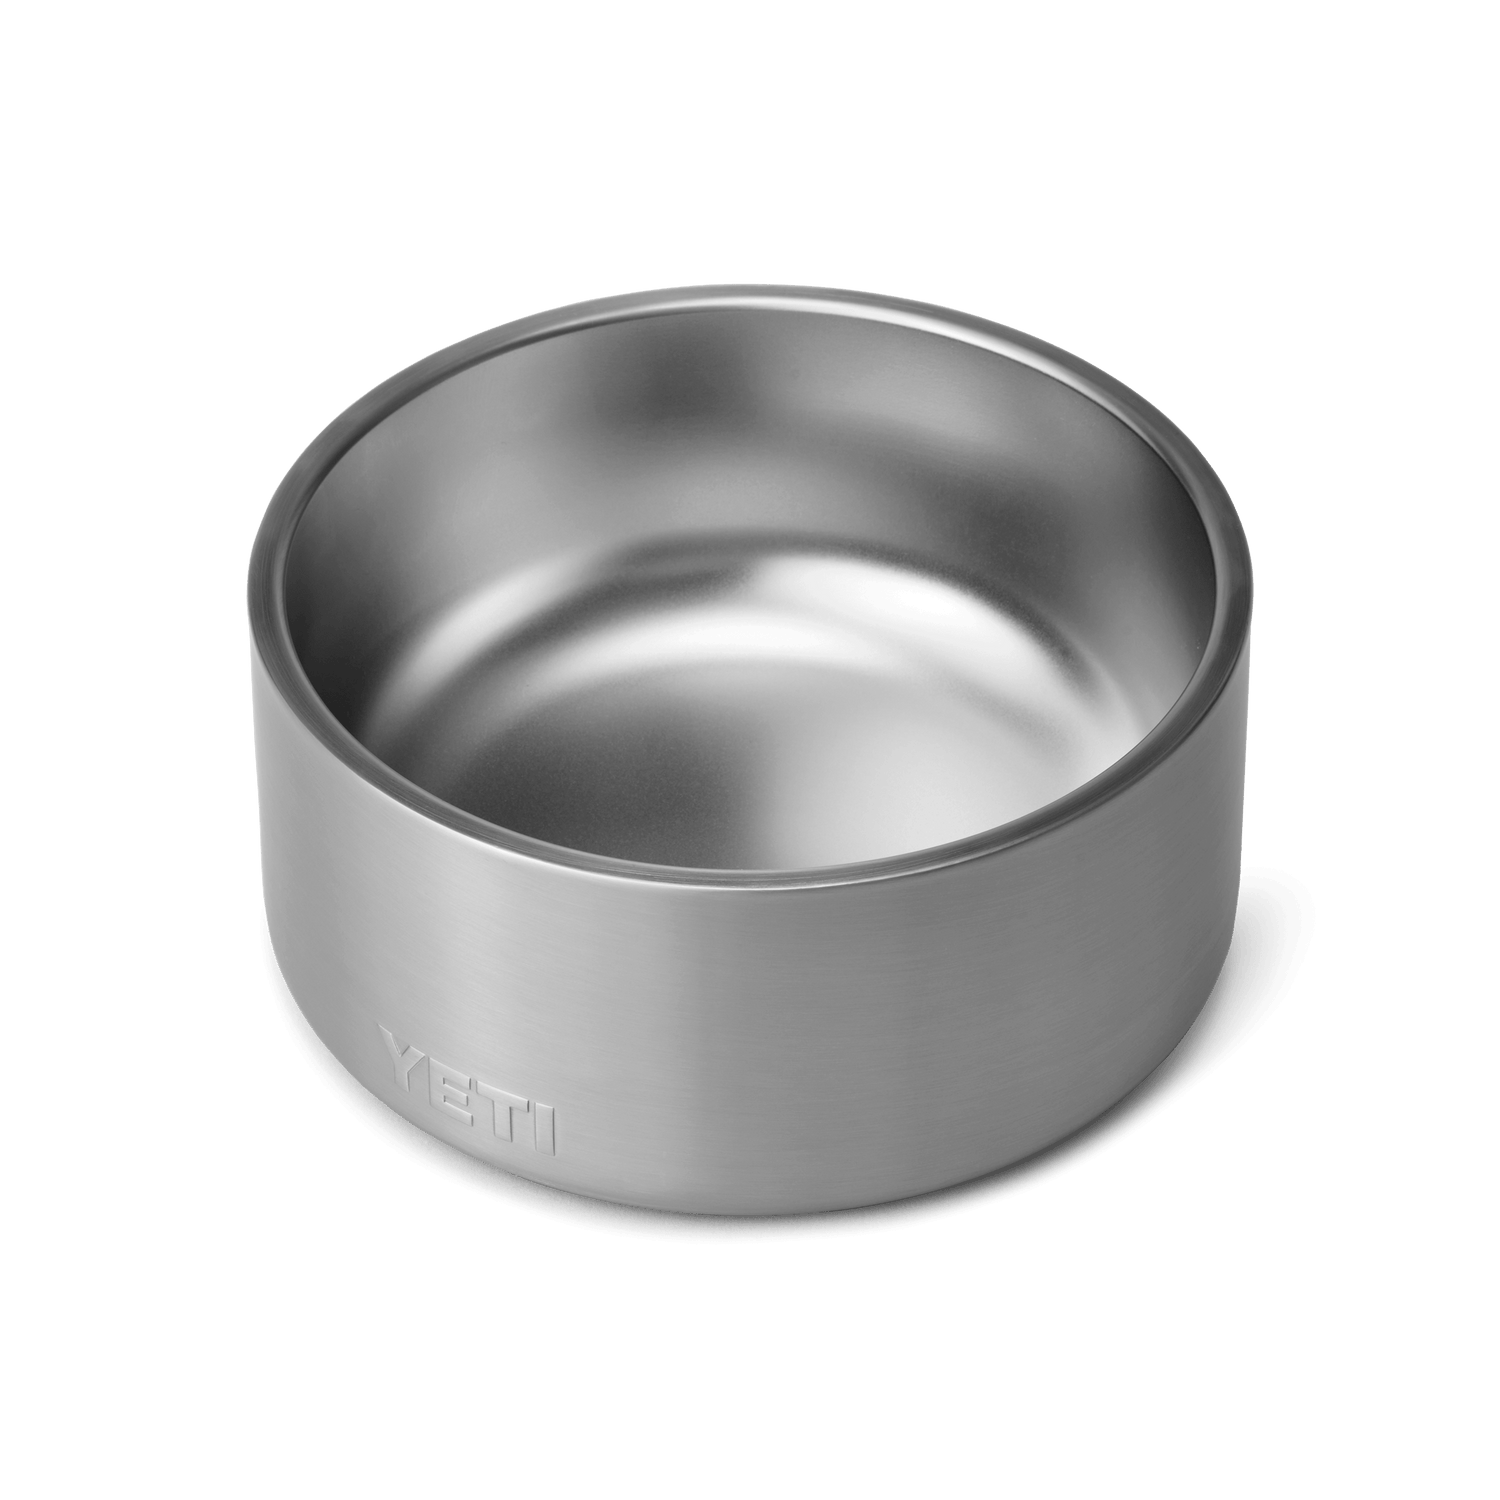 Bronco - Yeti Boomer 8 Dog Bowl Stainless Steel